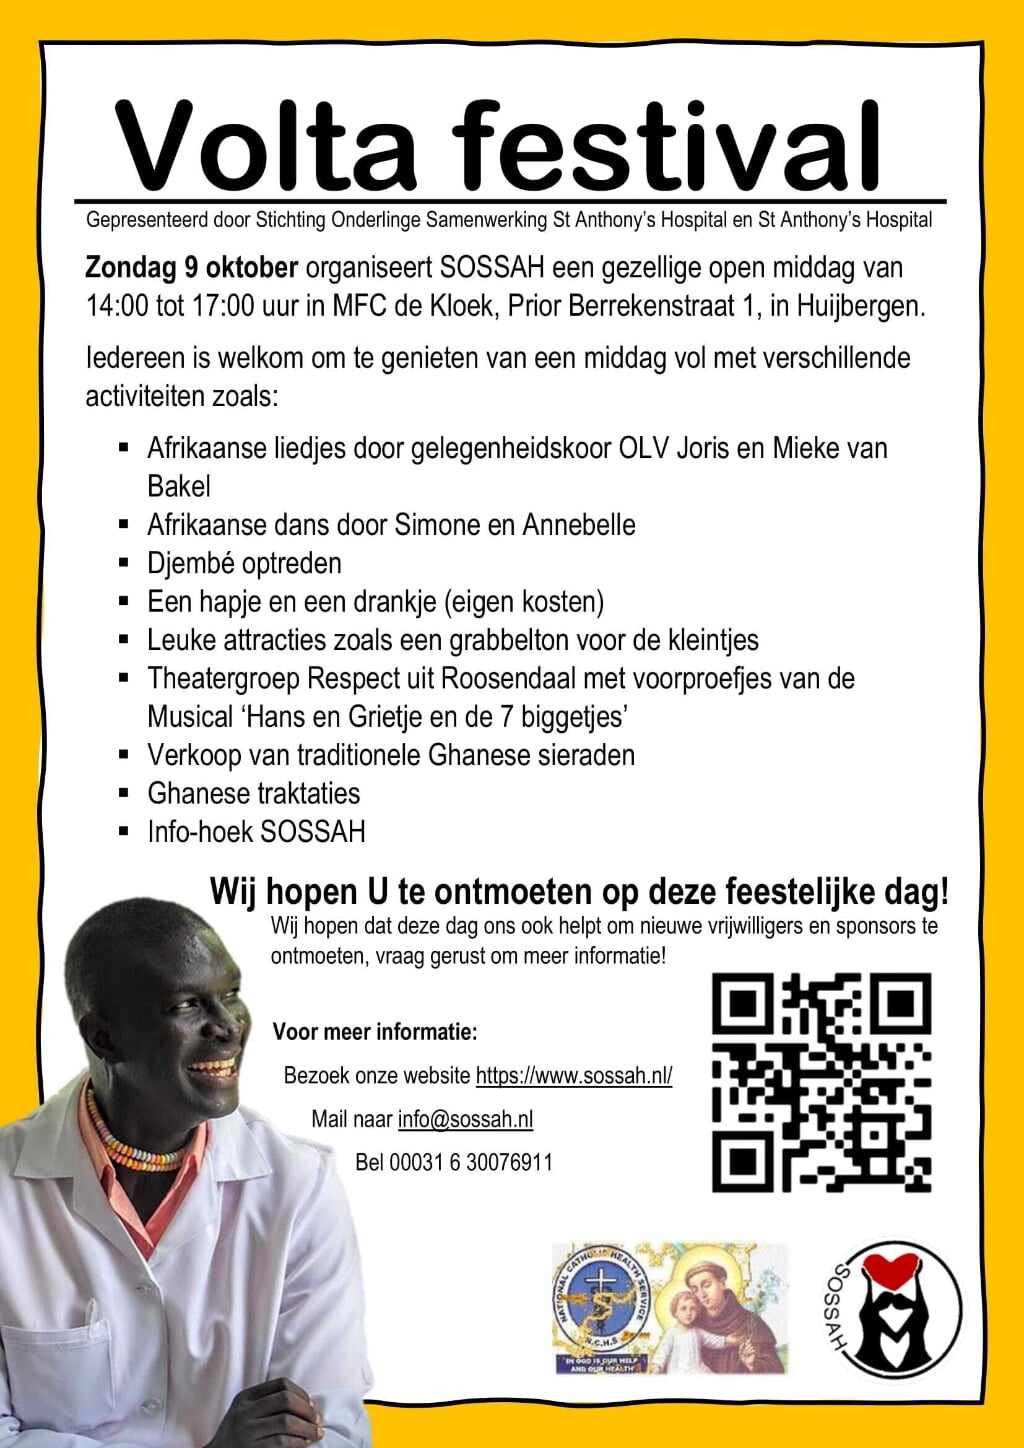 Programma Volta Festival, logo's SOSSAH en St. Anthony’s Hospital, qr-code gofundme inzamelingsactie en Dr. Petit, Ghanees orthopeed met Nederlandse snoepkettingen om zijn nek als arbeidsvitaminen.